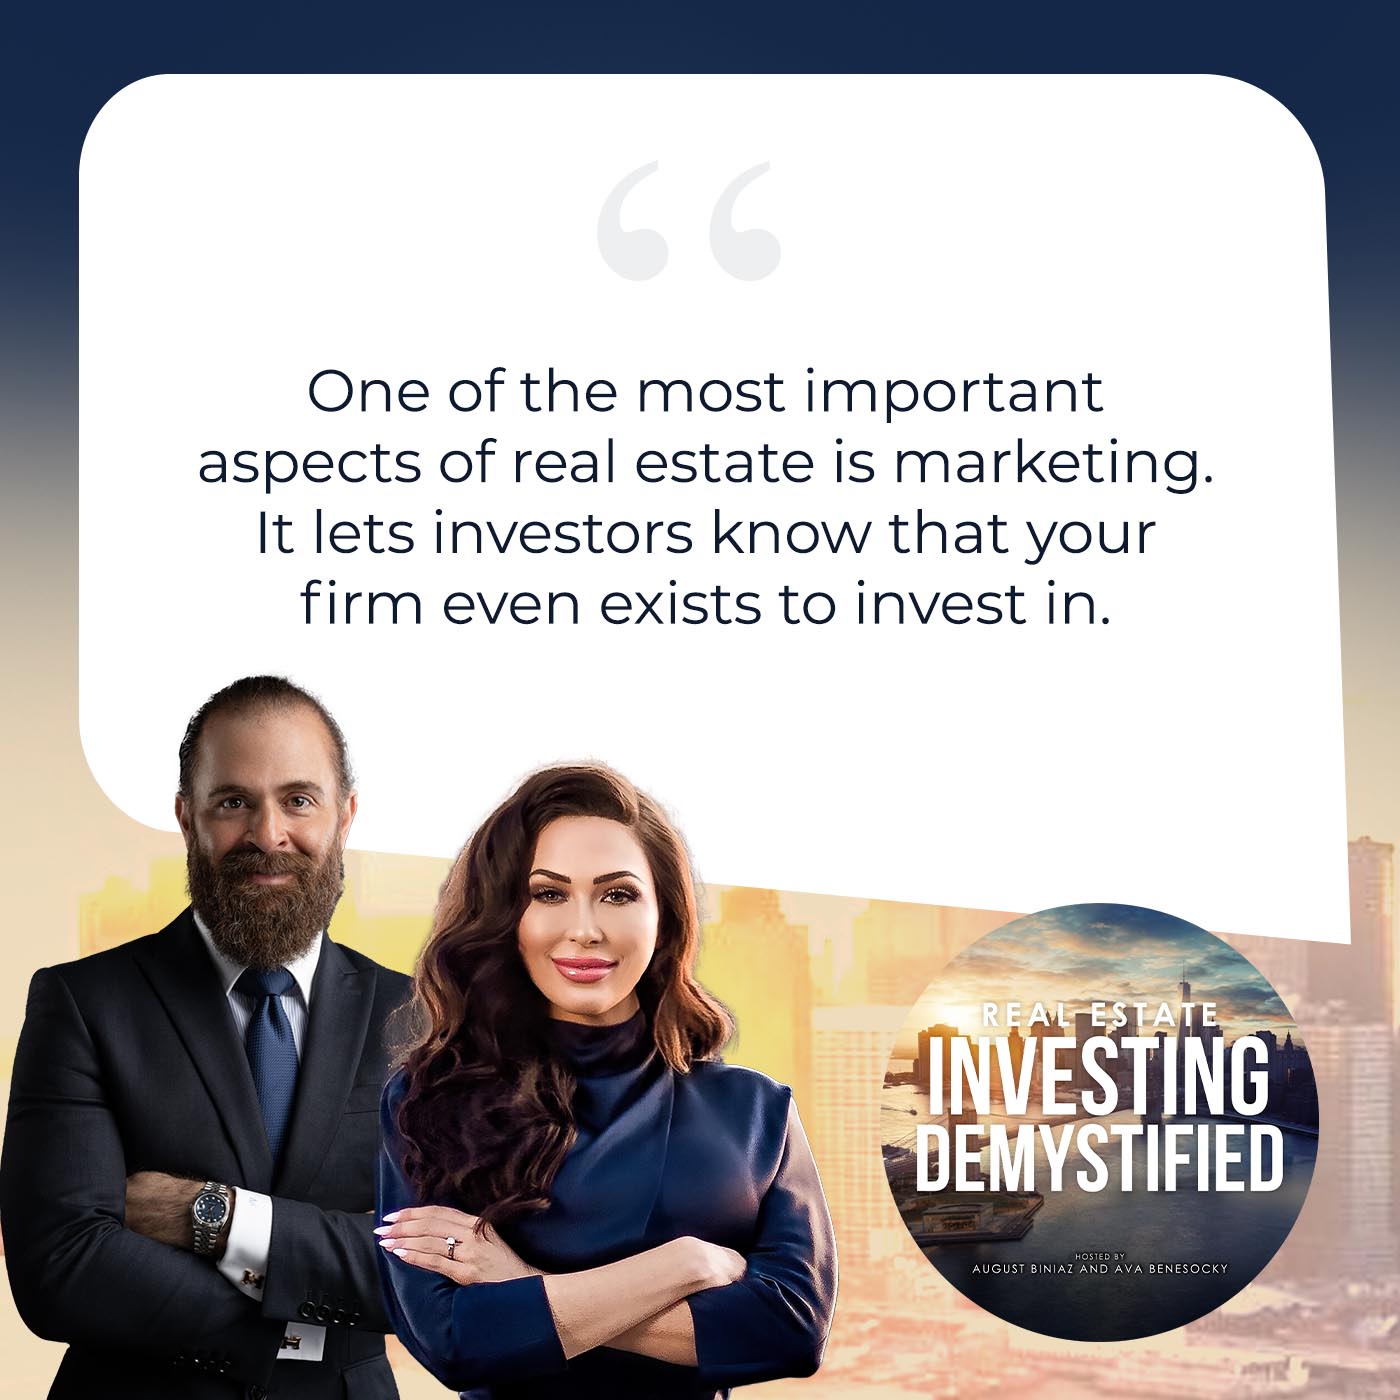 REID Jon Simpson | Multifamily Properties Marketing Strategies